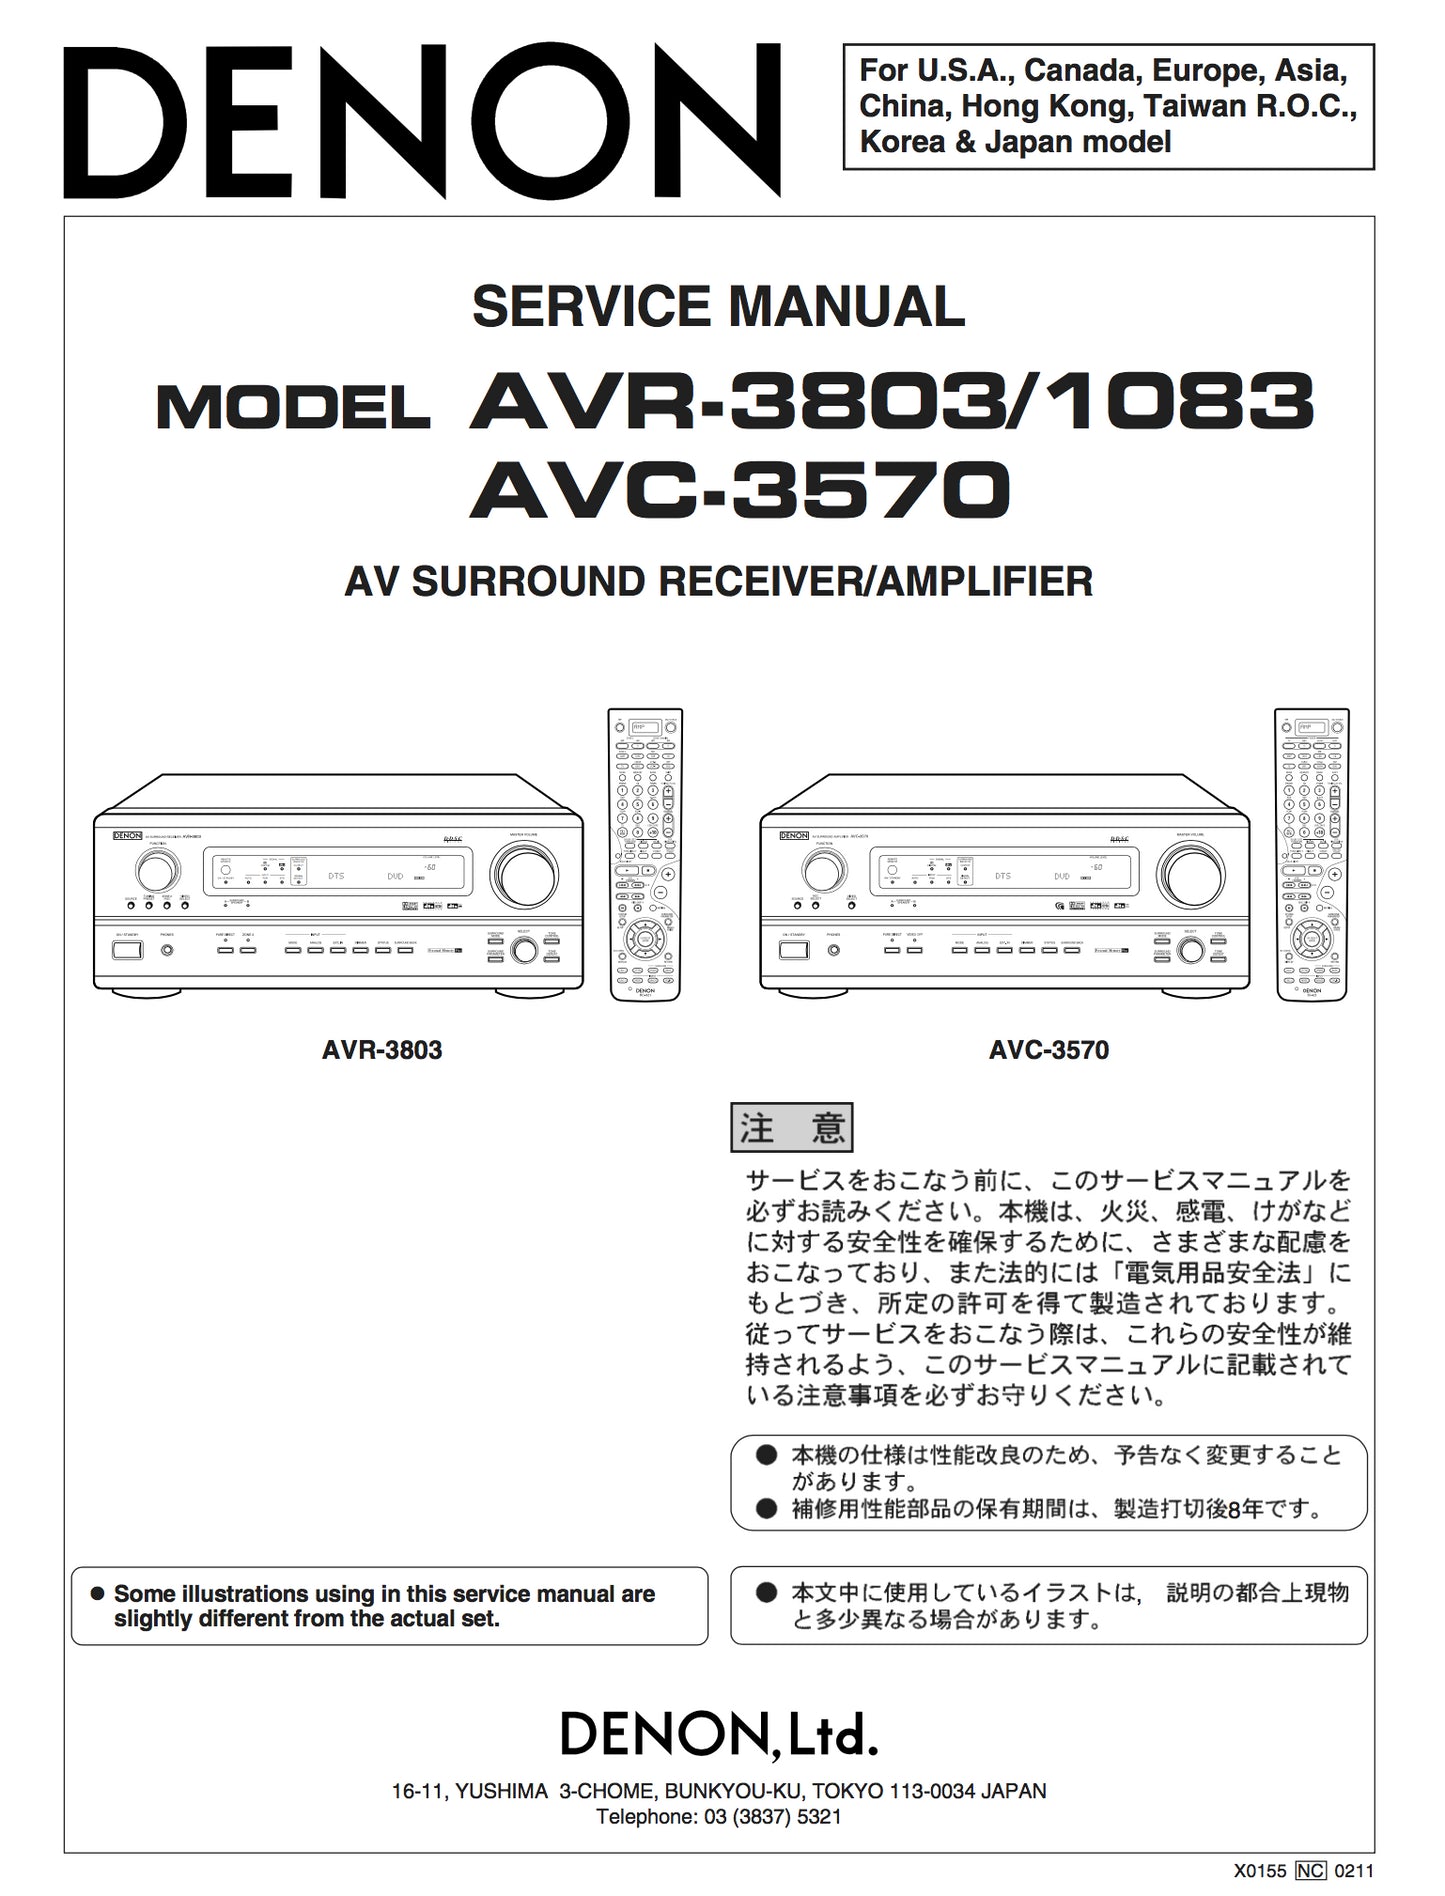 Denon AVR-3803 Service Manual - Spared Parts UK